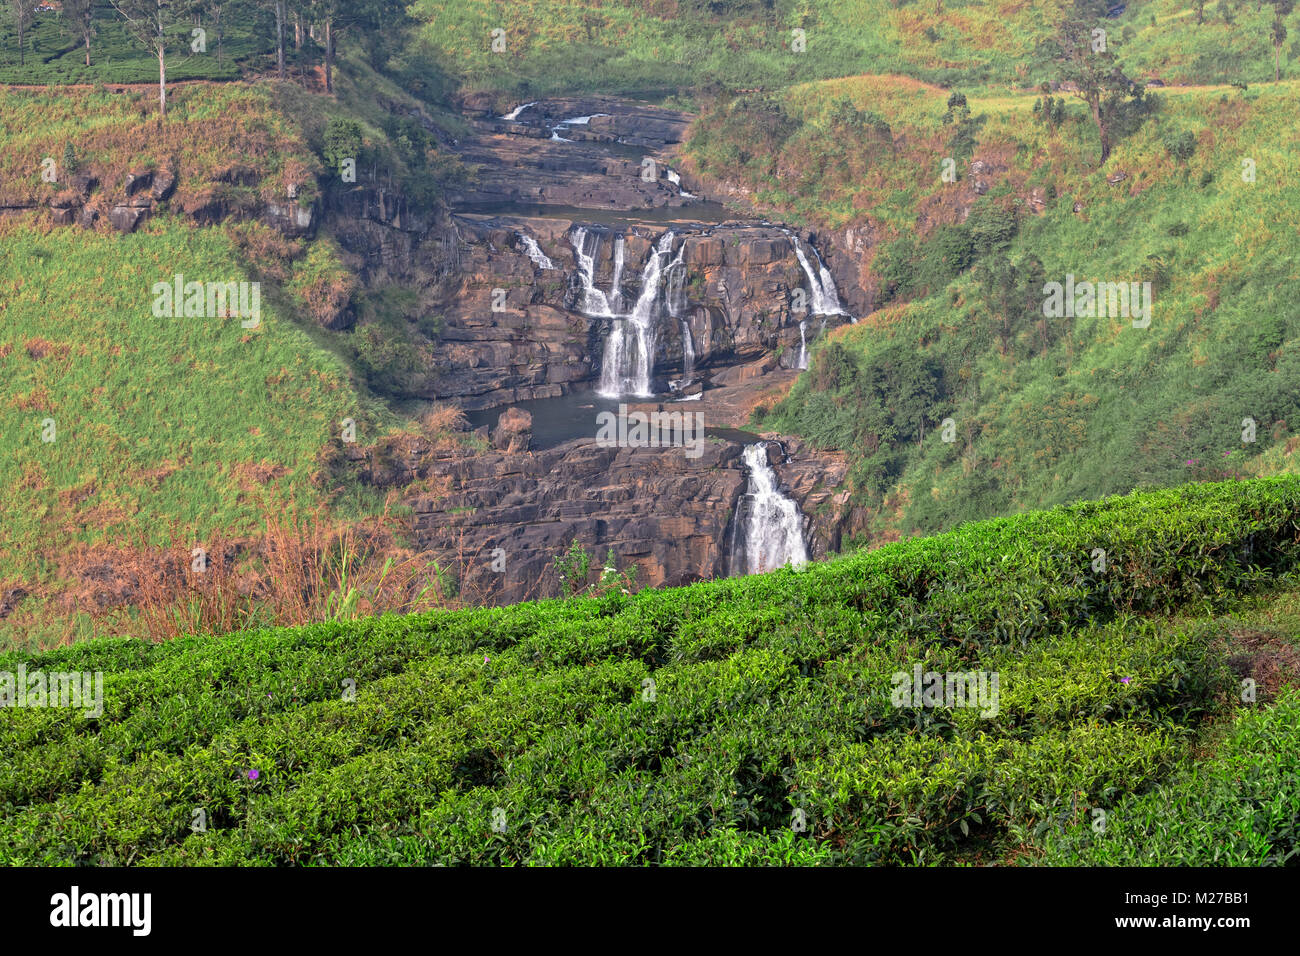 St Clair falls, Nuwara Eliya, Sri Lanka, Asia Foto de stock